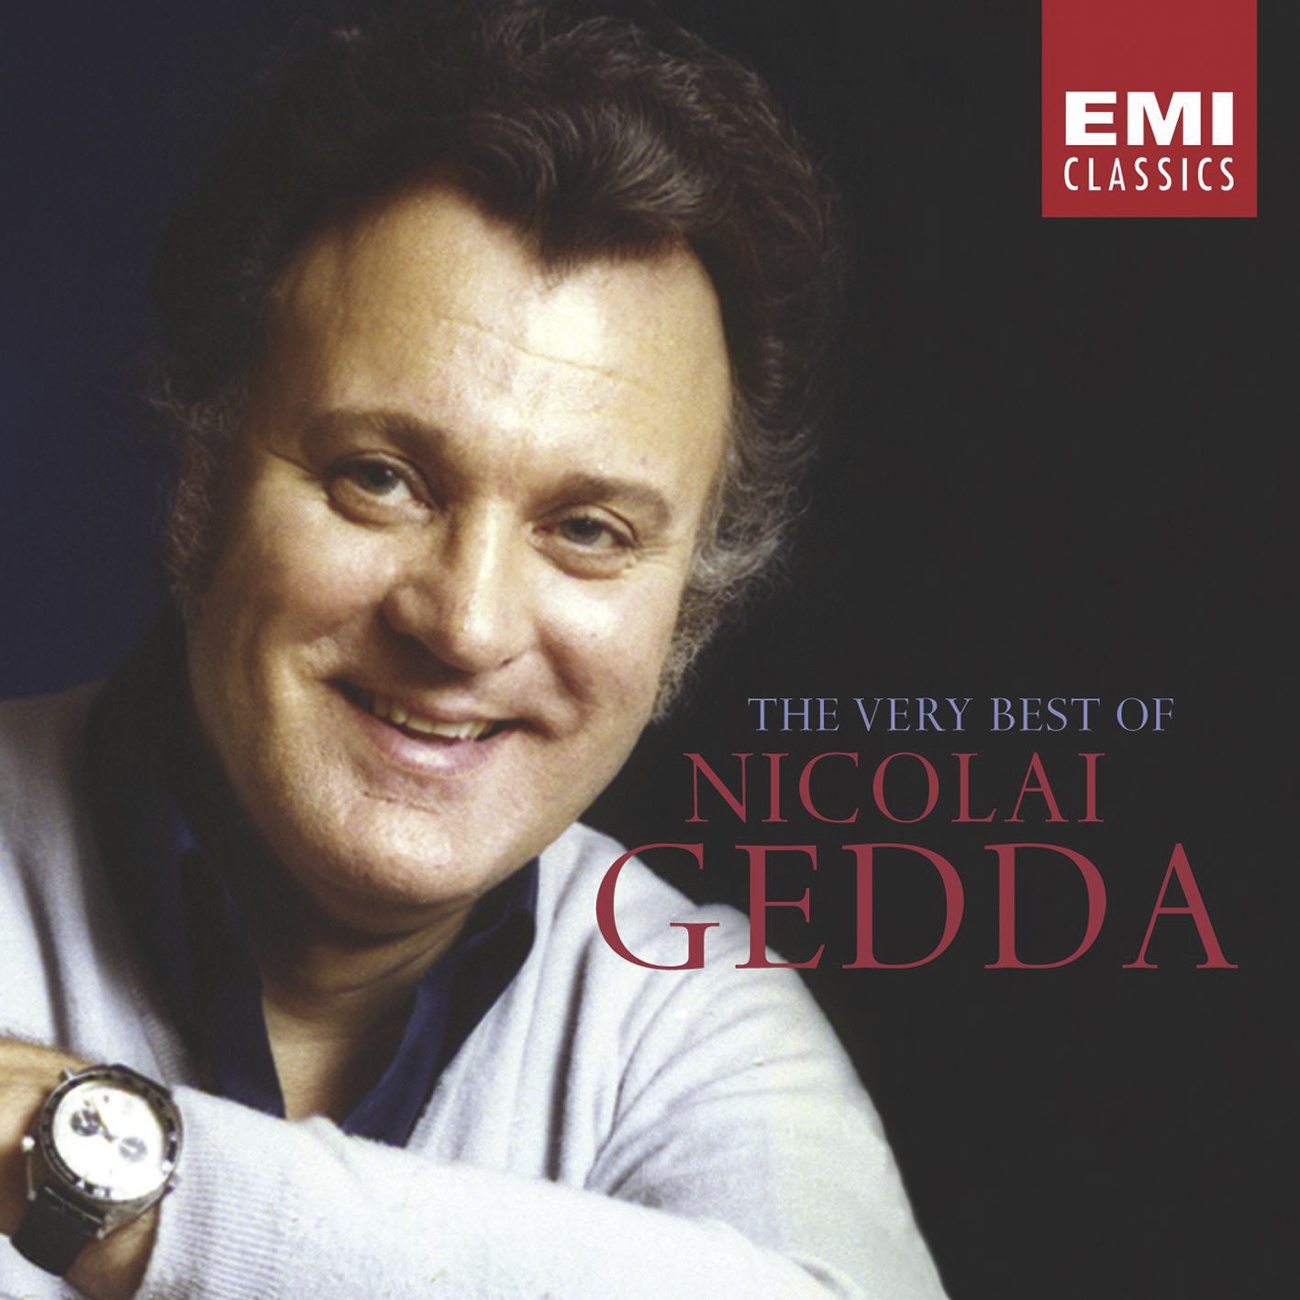 The Very Best of Nicolai Gedda